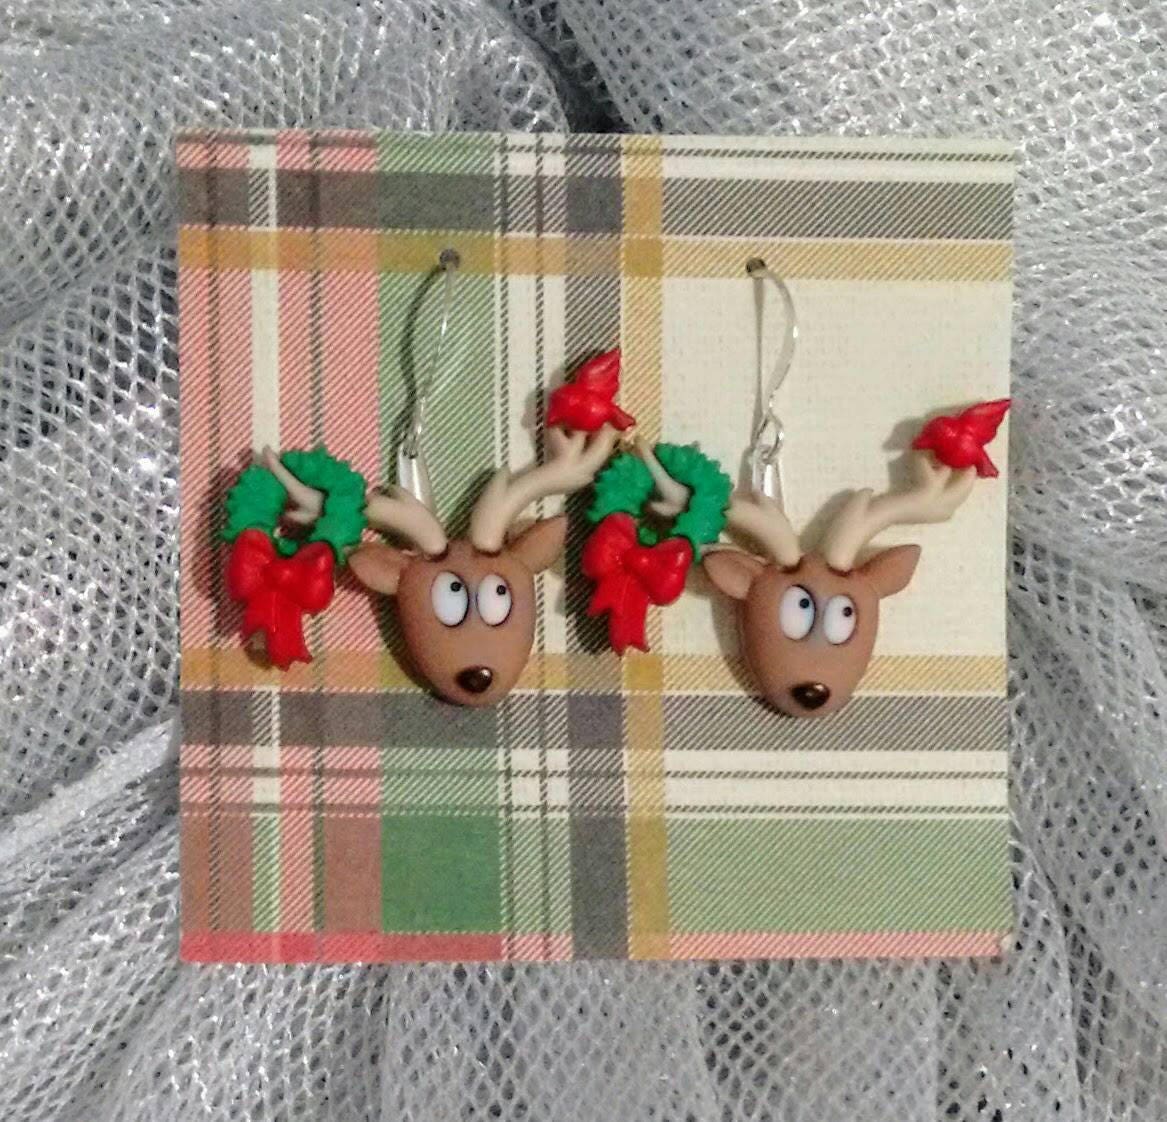 Funny Christmas reindeer with wreath earrings